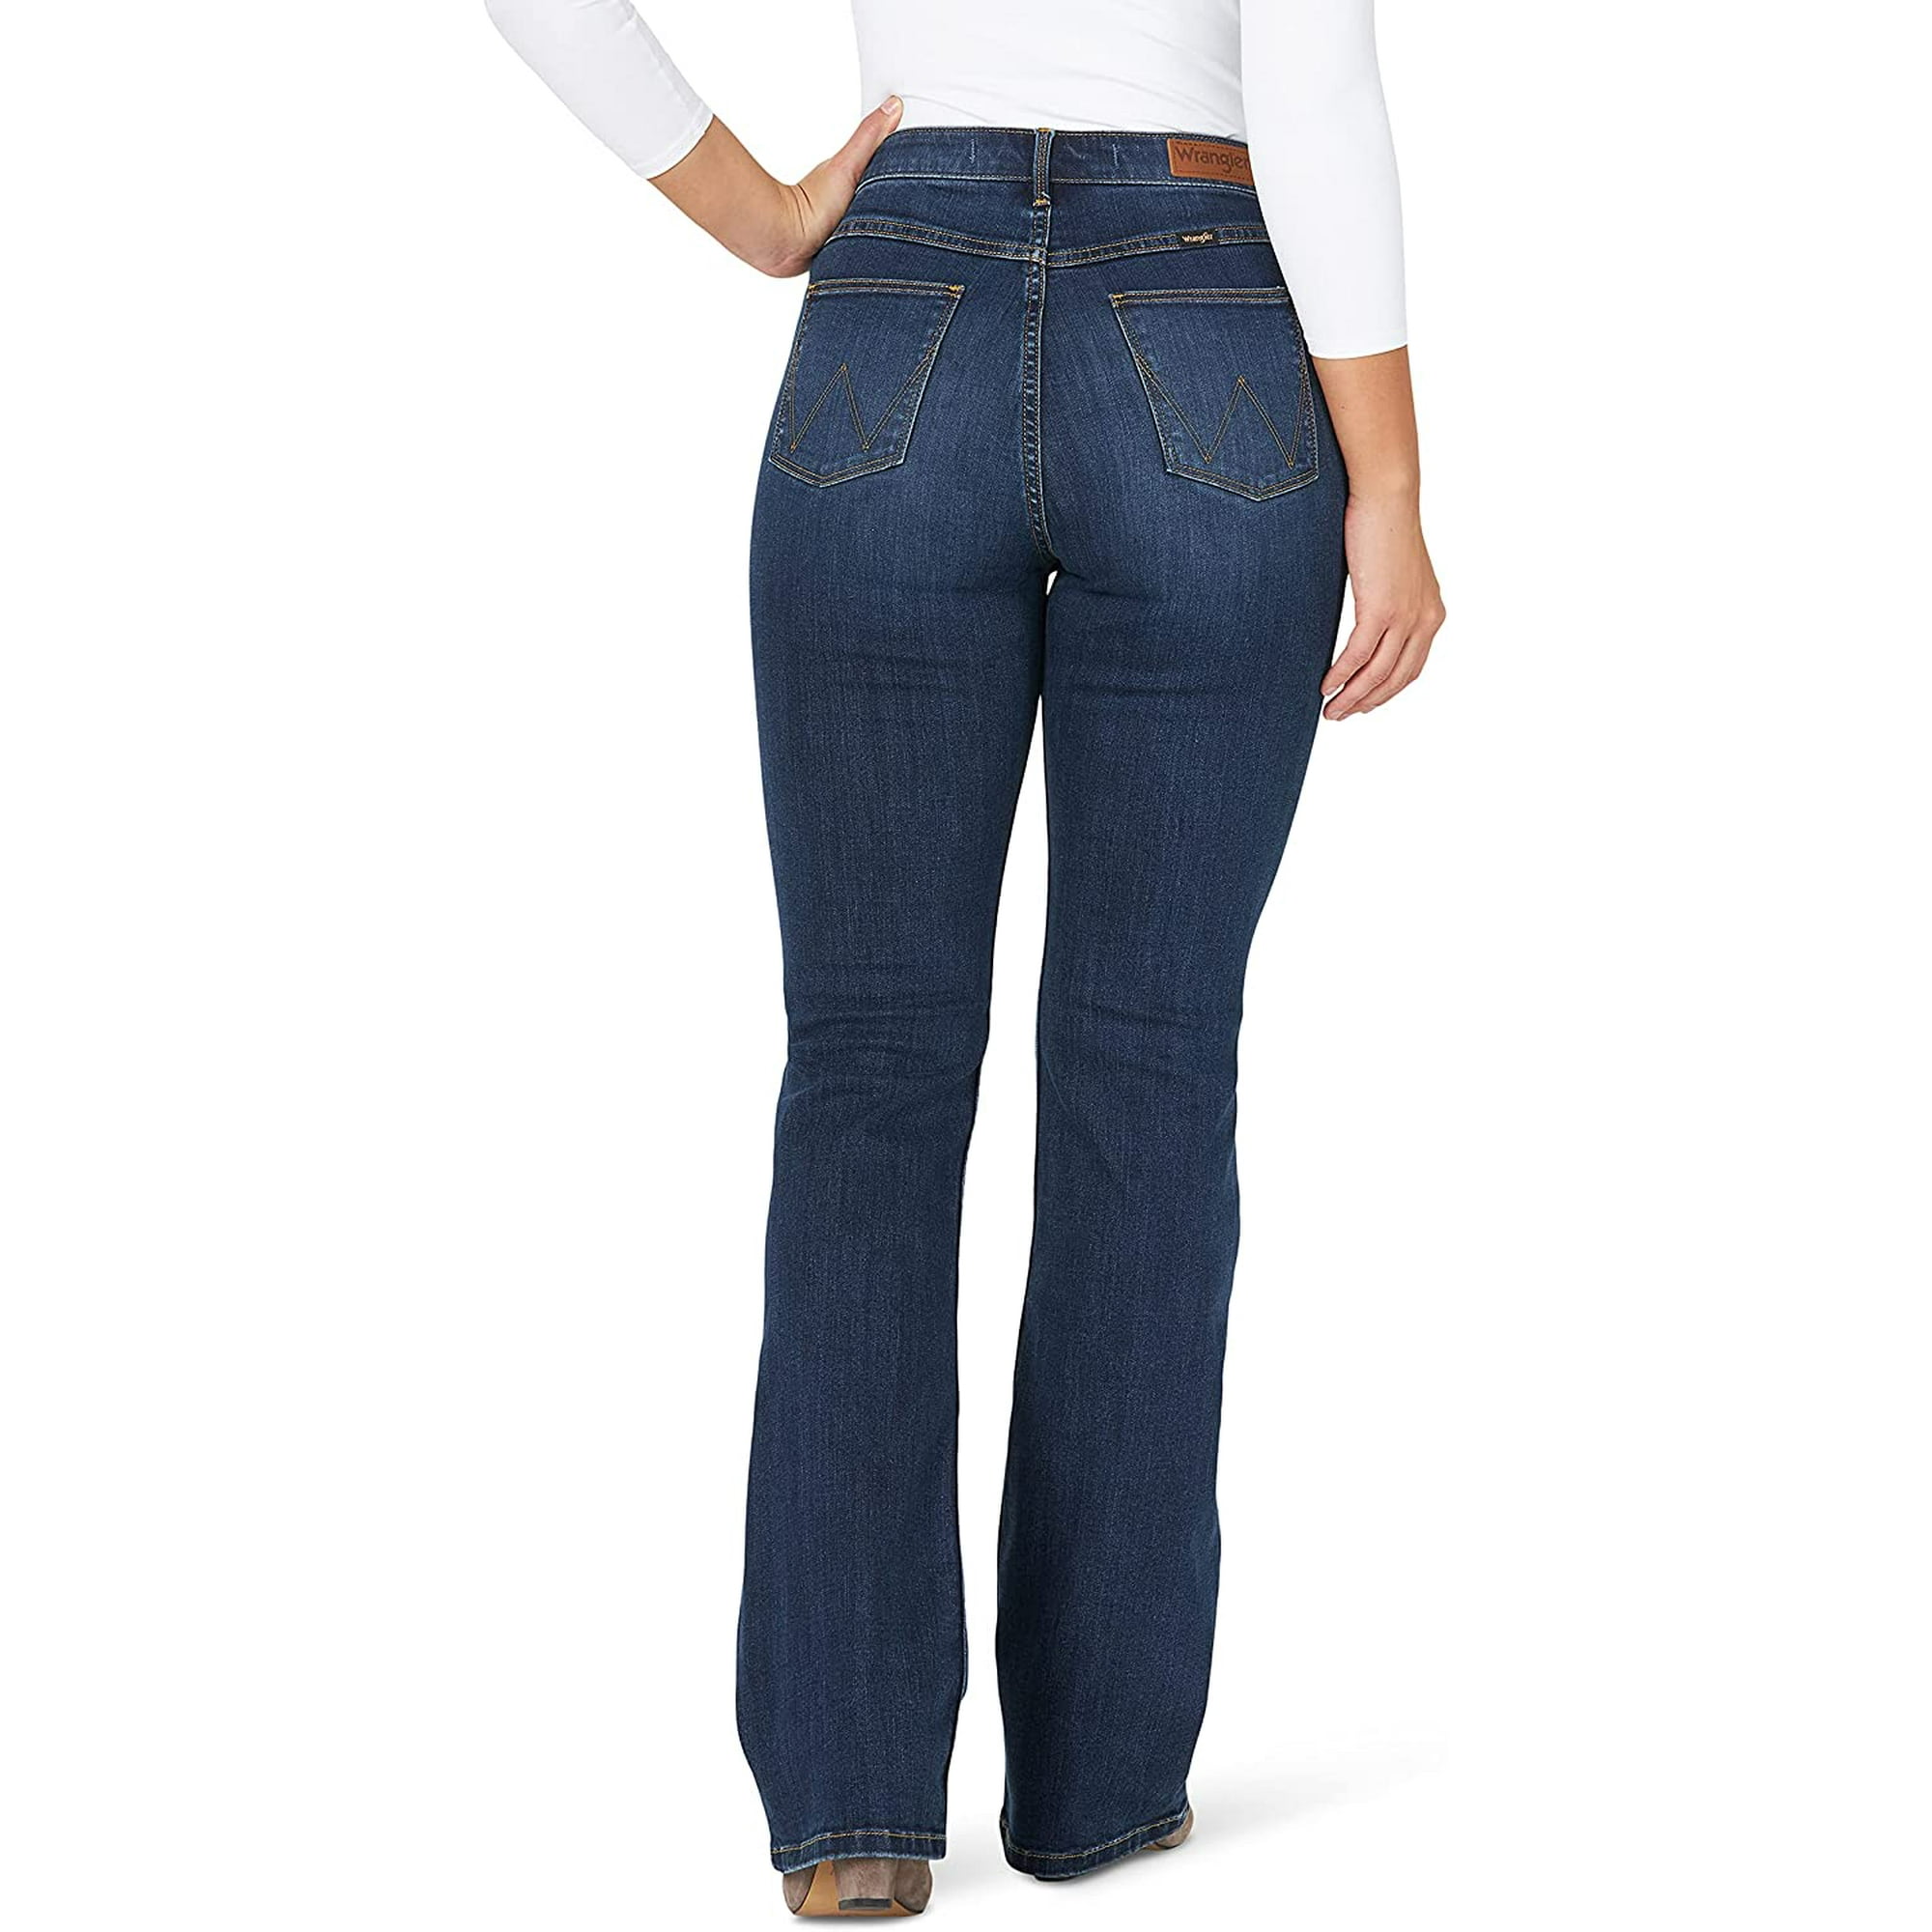 Wrangler Women's High Rise Bold Boot Jean, Stockton, 12W x 32L | Walmart  Canada